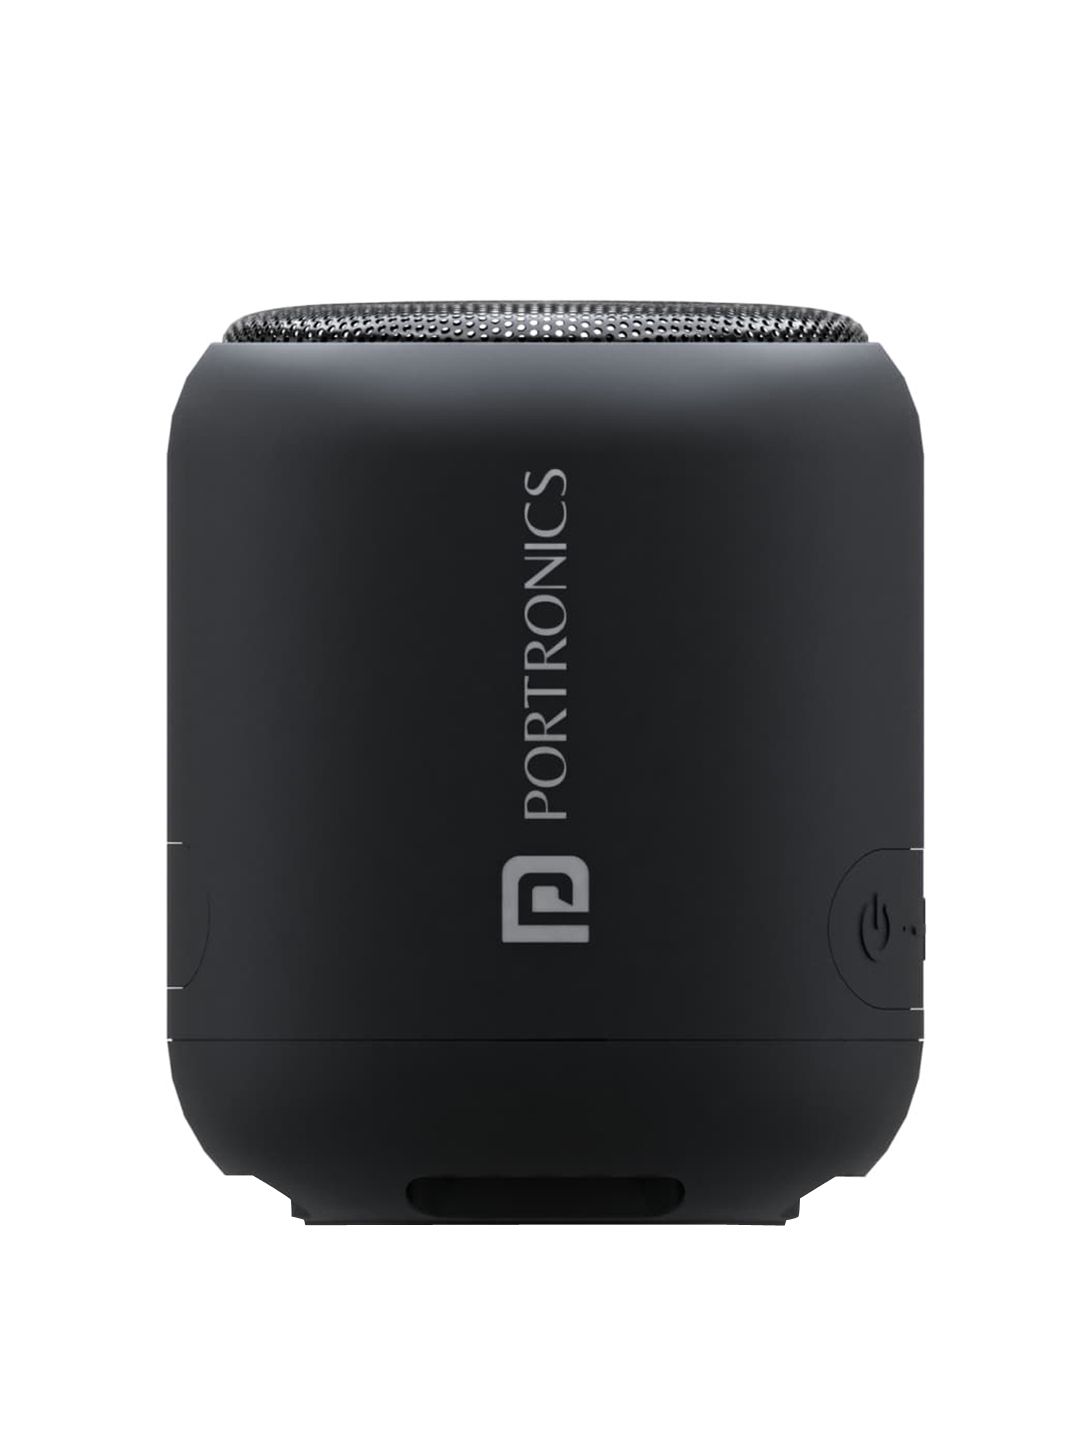 Portronics Black Portable Speaker with Bluetooth POR-1288 Price in India